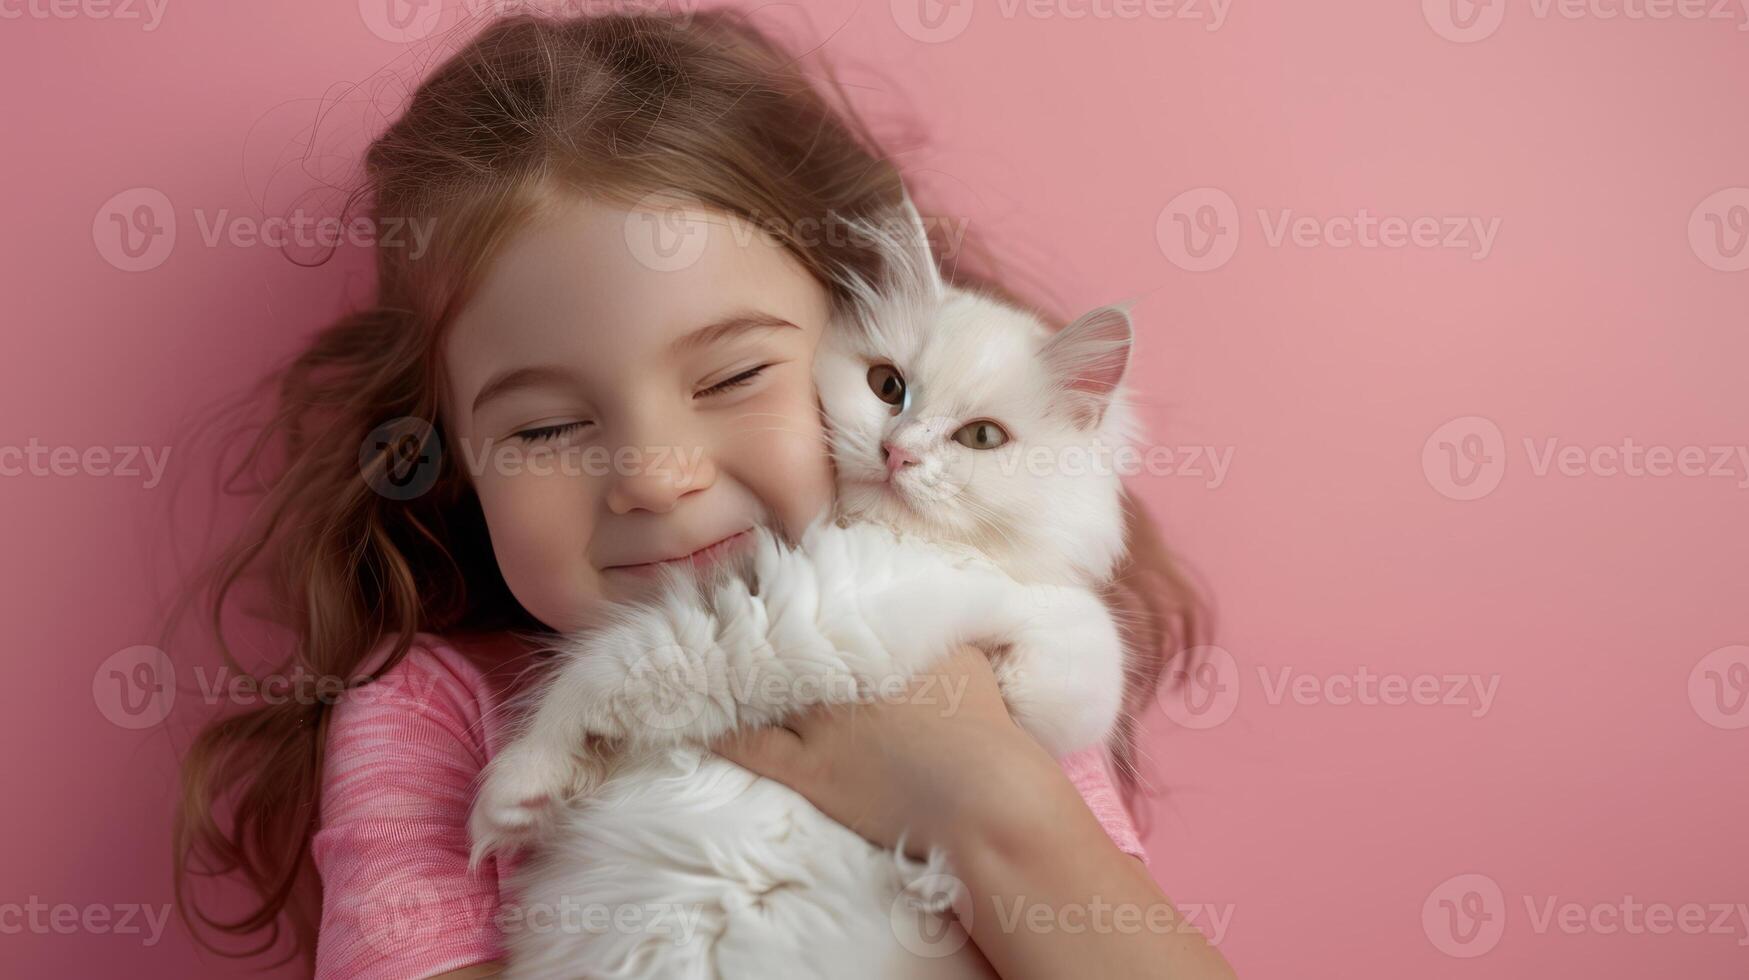 ai gegenereerd weinig meisje knuffelen uw weinig kat Aan pastel roze achtergrond foto